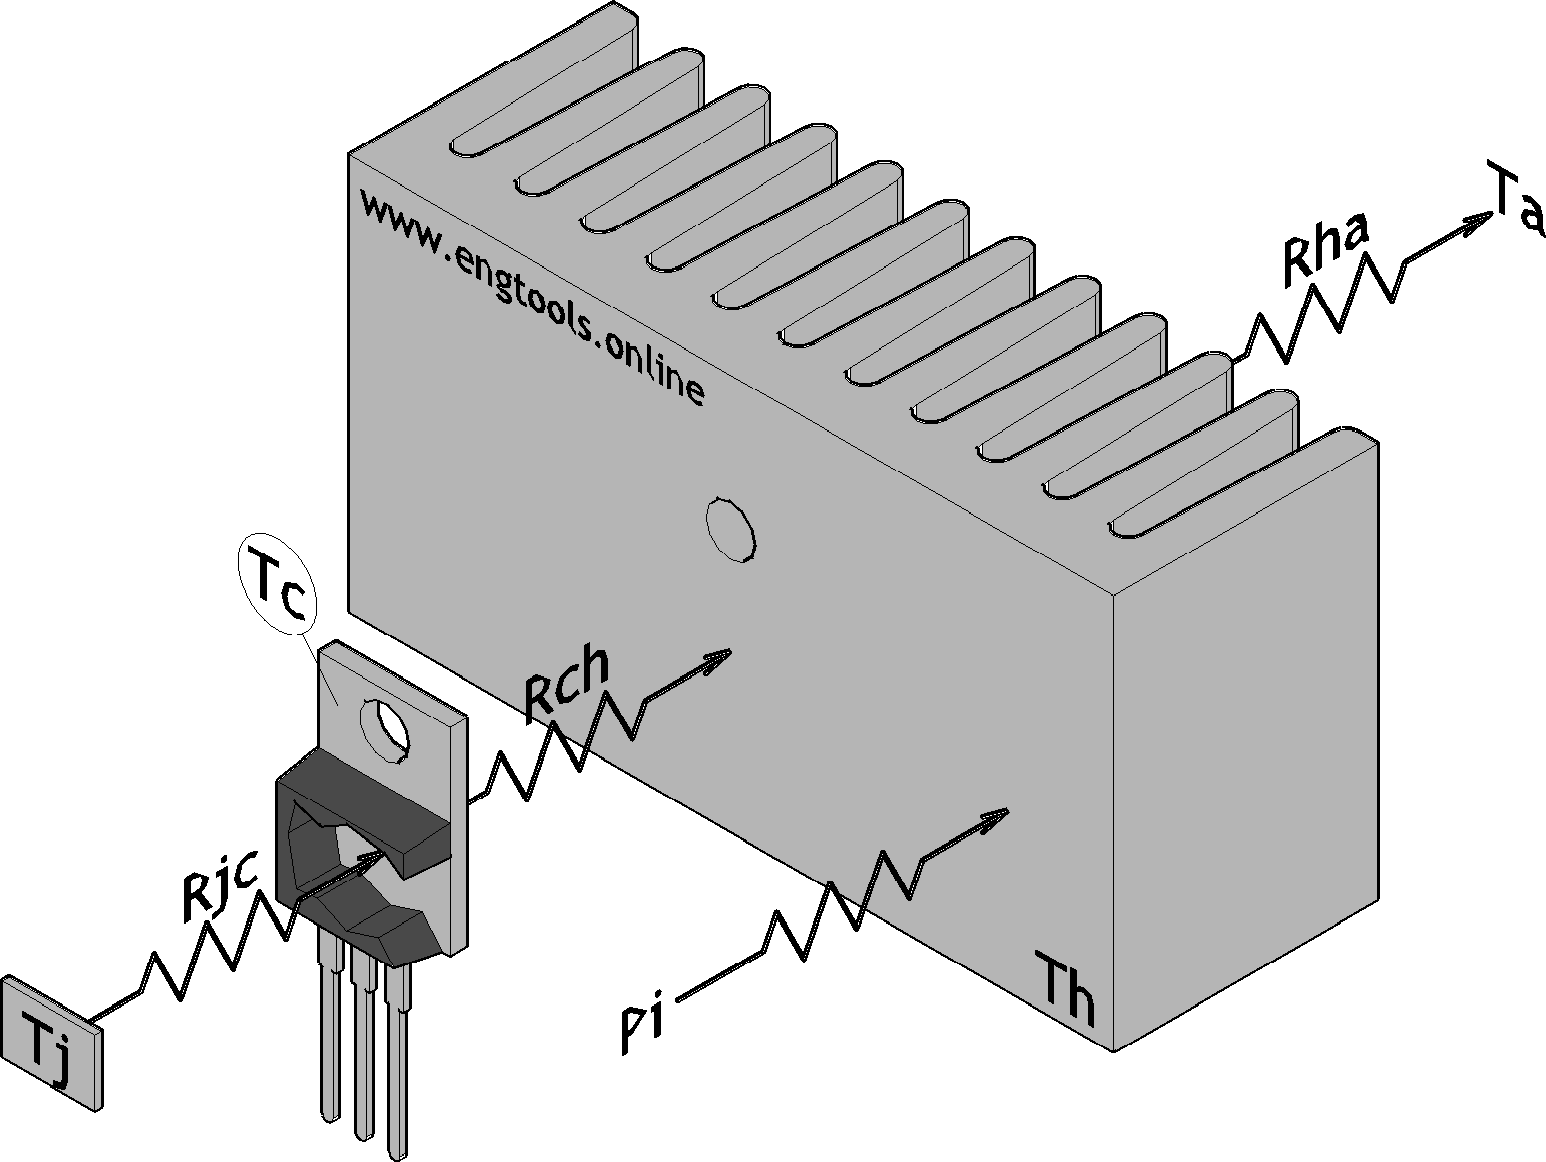 heatsink schematic